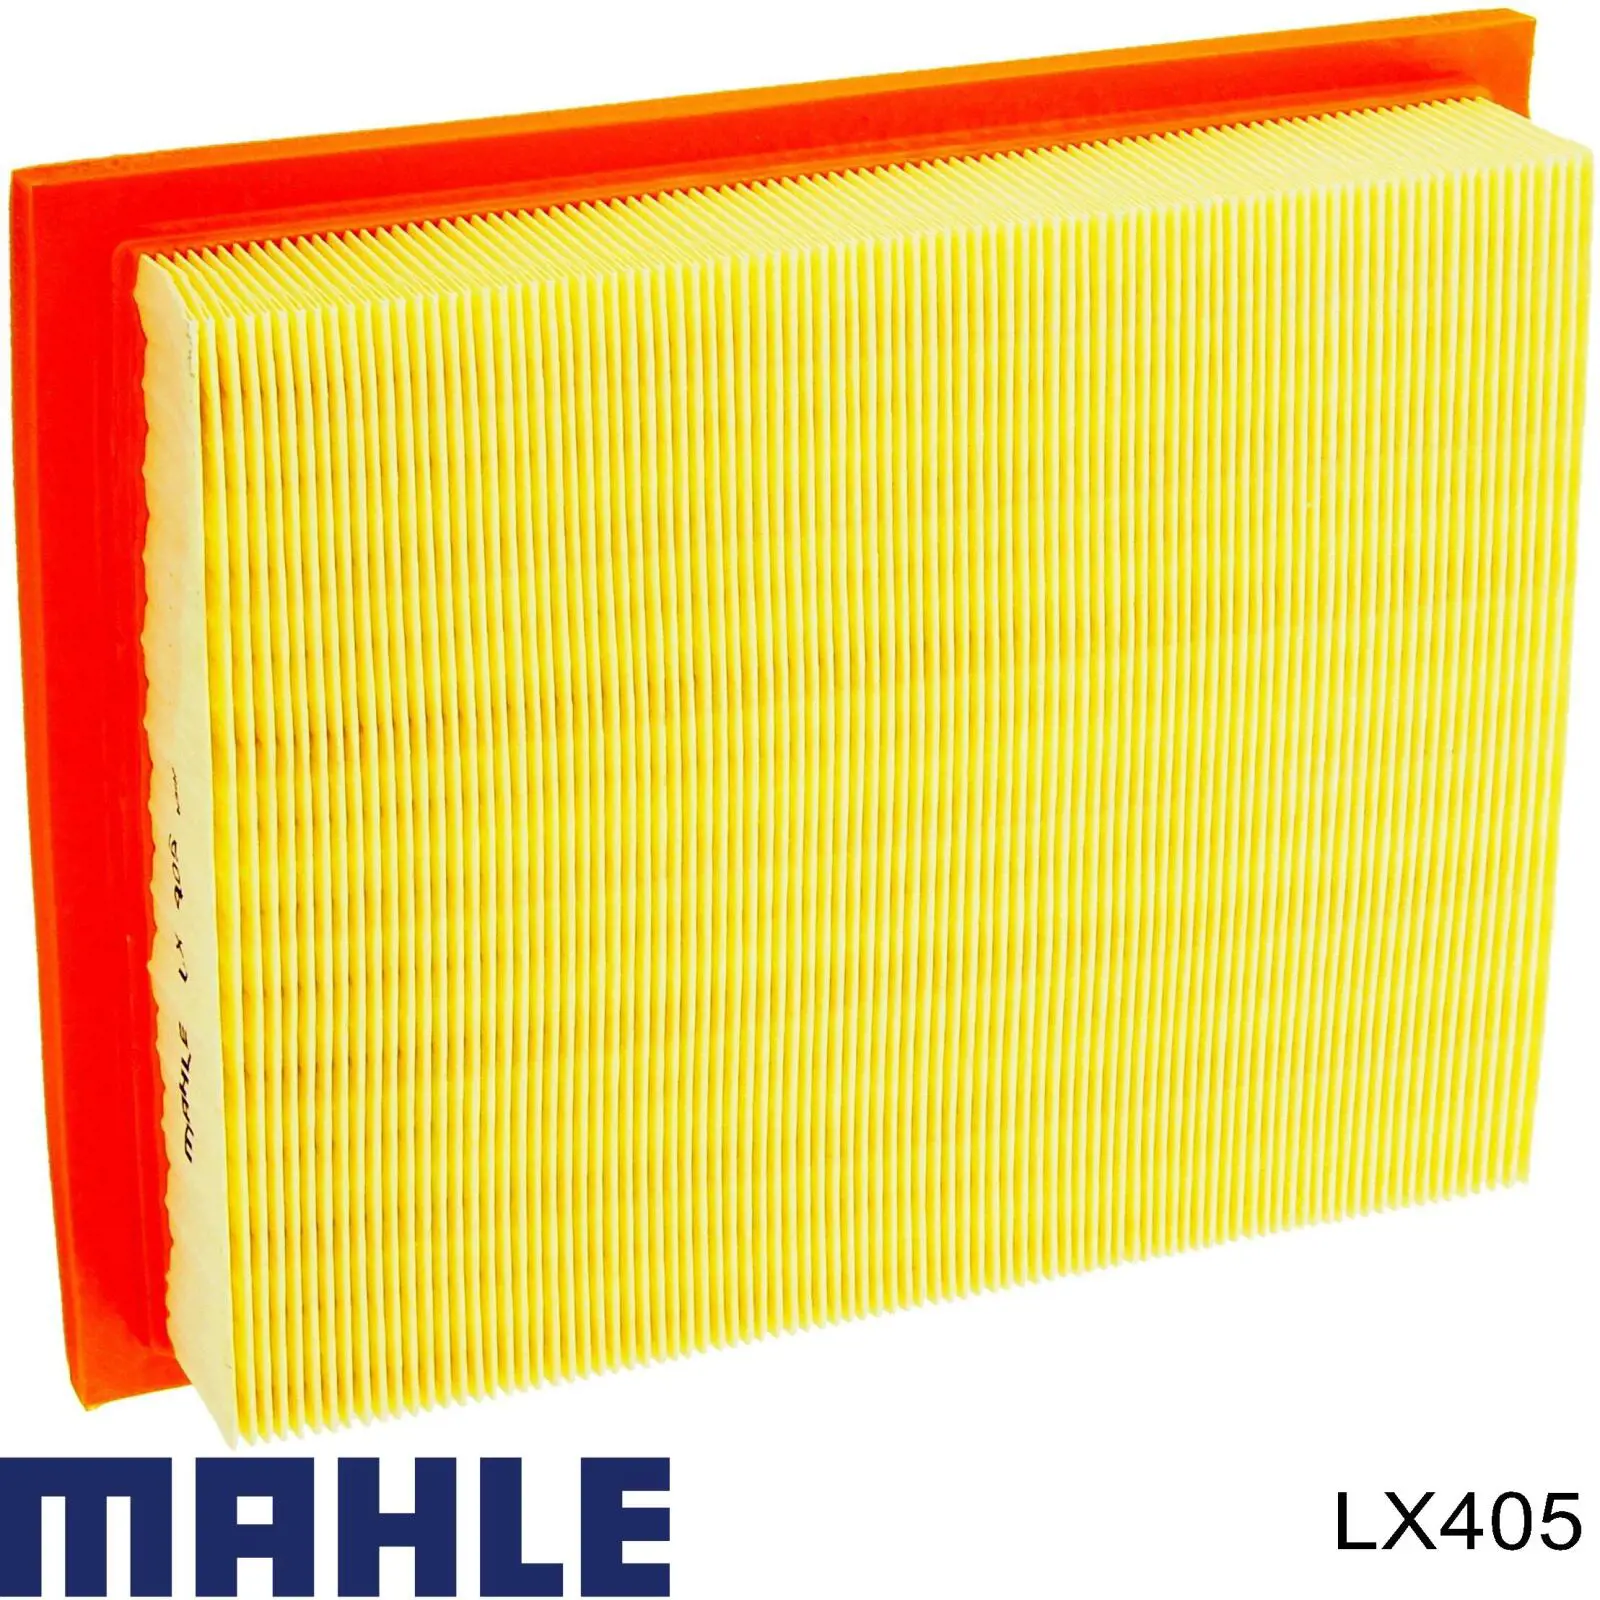 LX405 Mahle Original filtro de aire